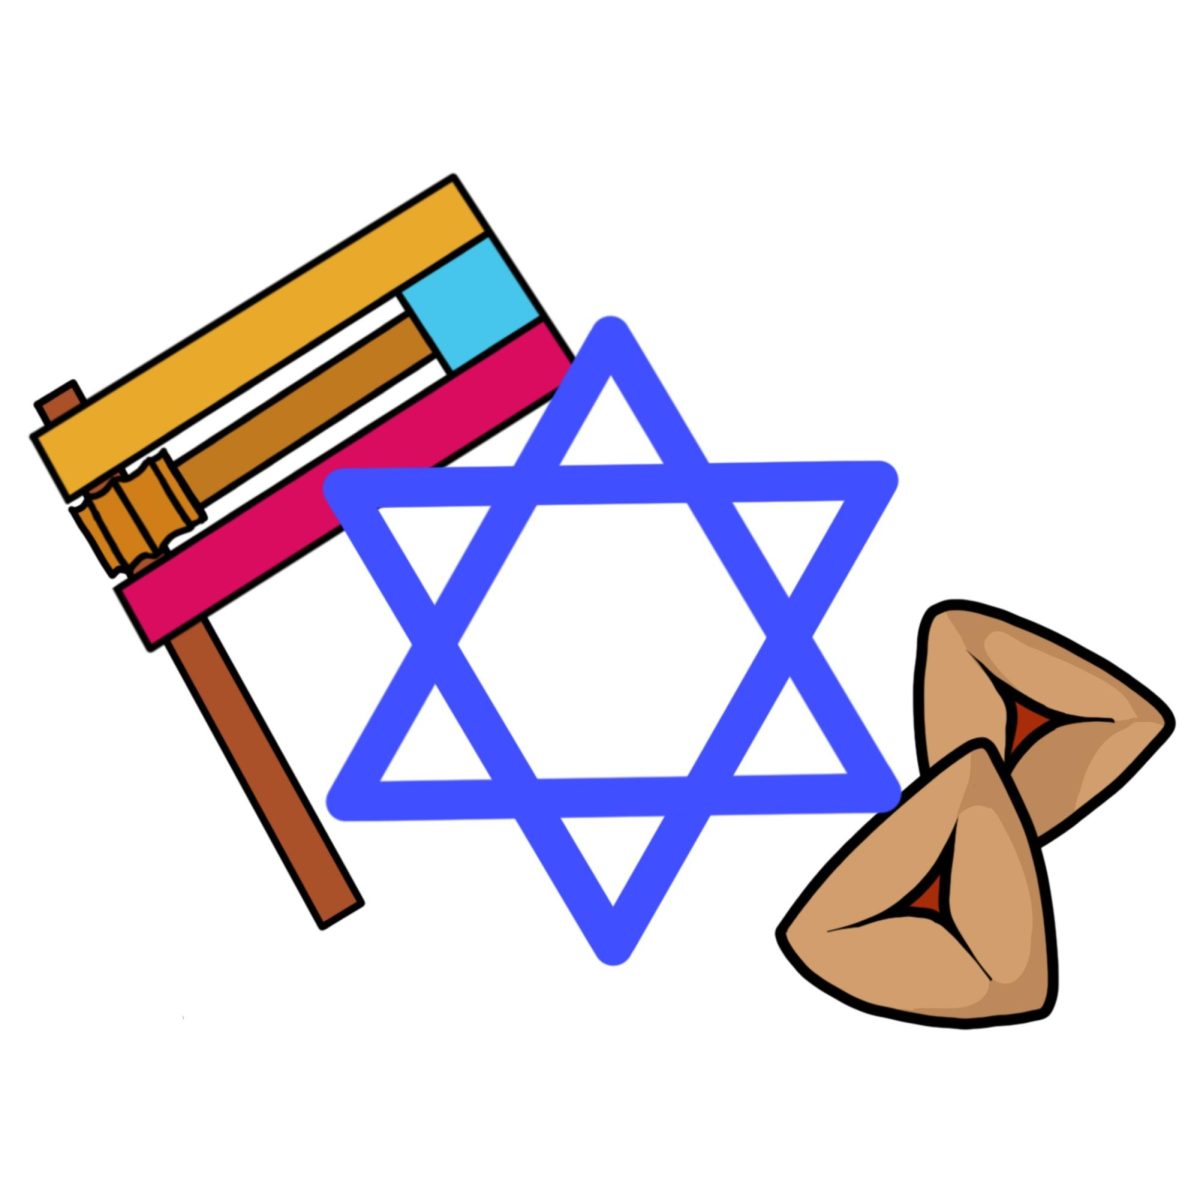 Purim%3A+A+Festive+Jewish+Holiday+of+Joy+and+Celebration